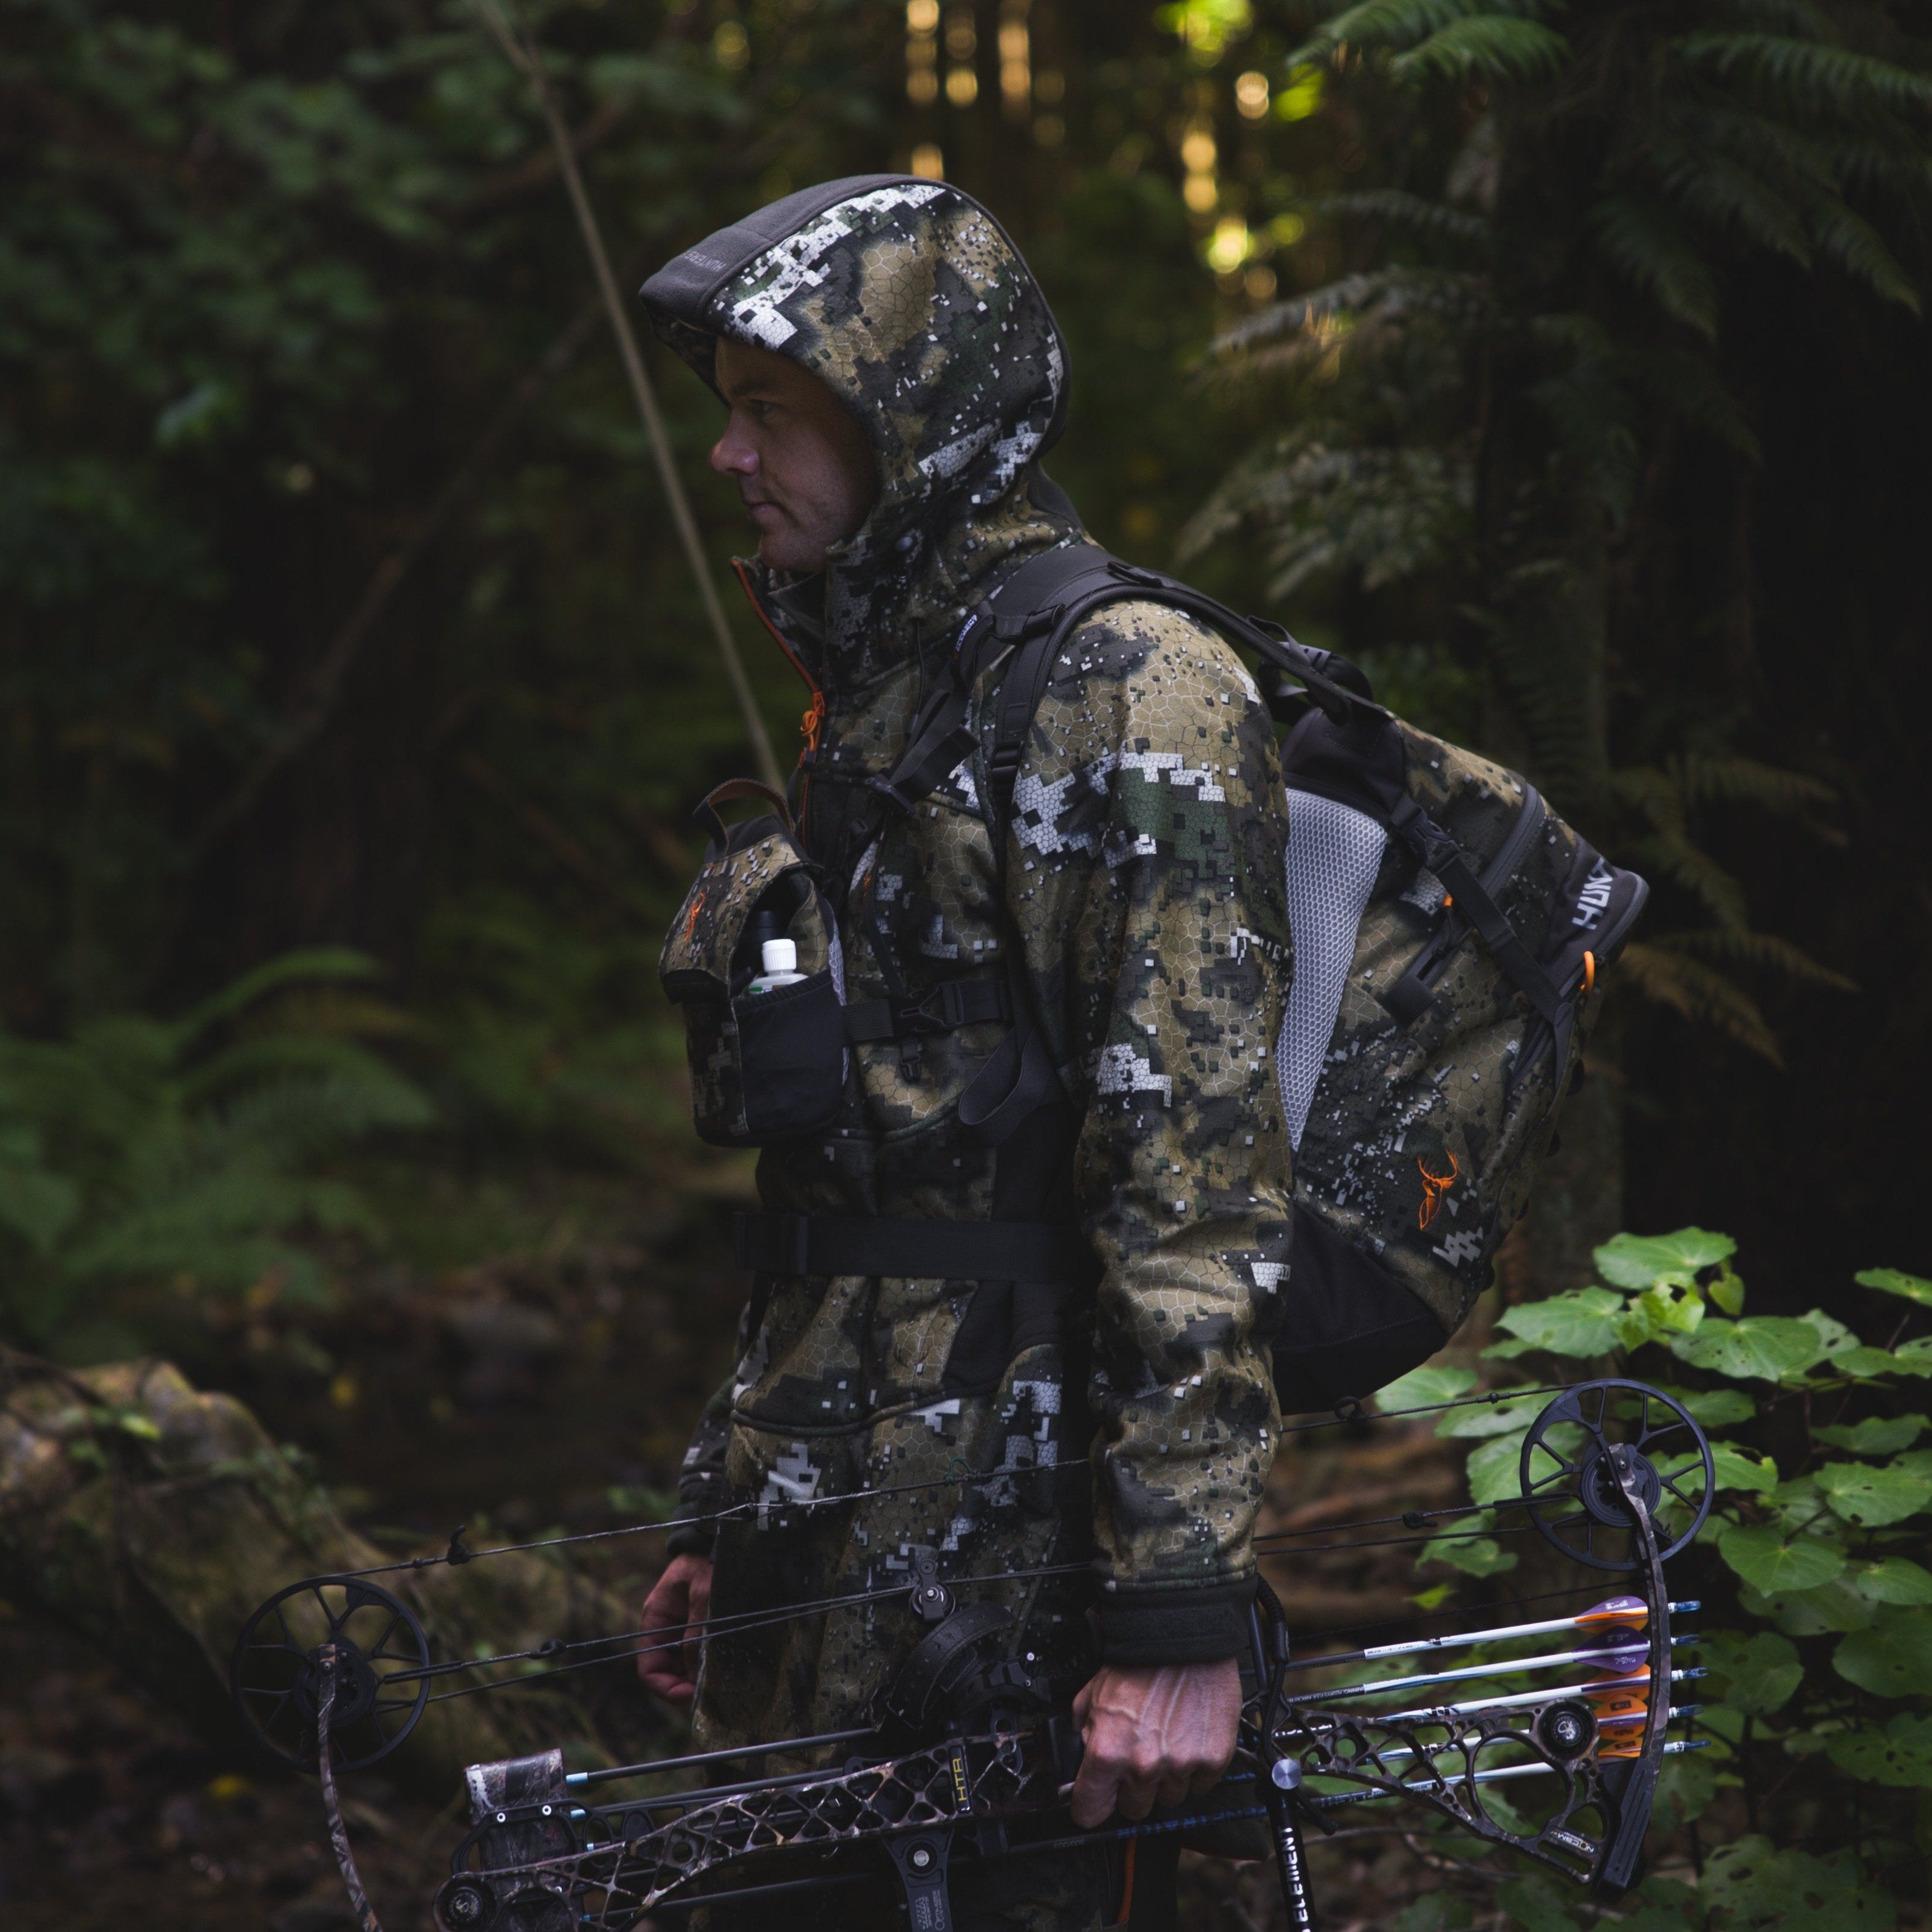 Sentry Bush Coat Half-Zip - Hunters Element Global